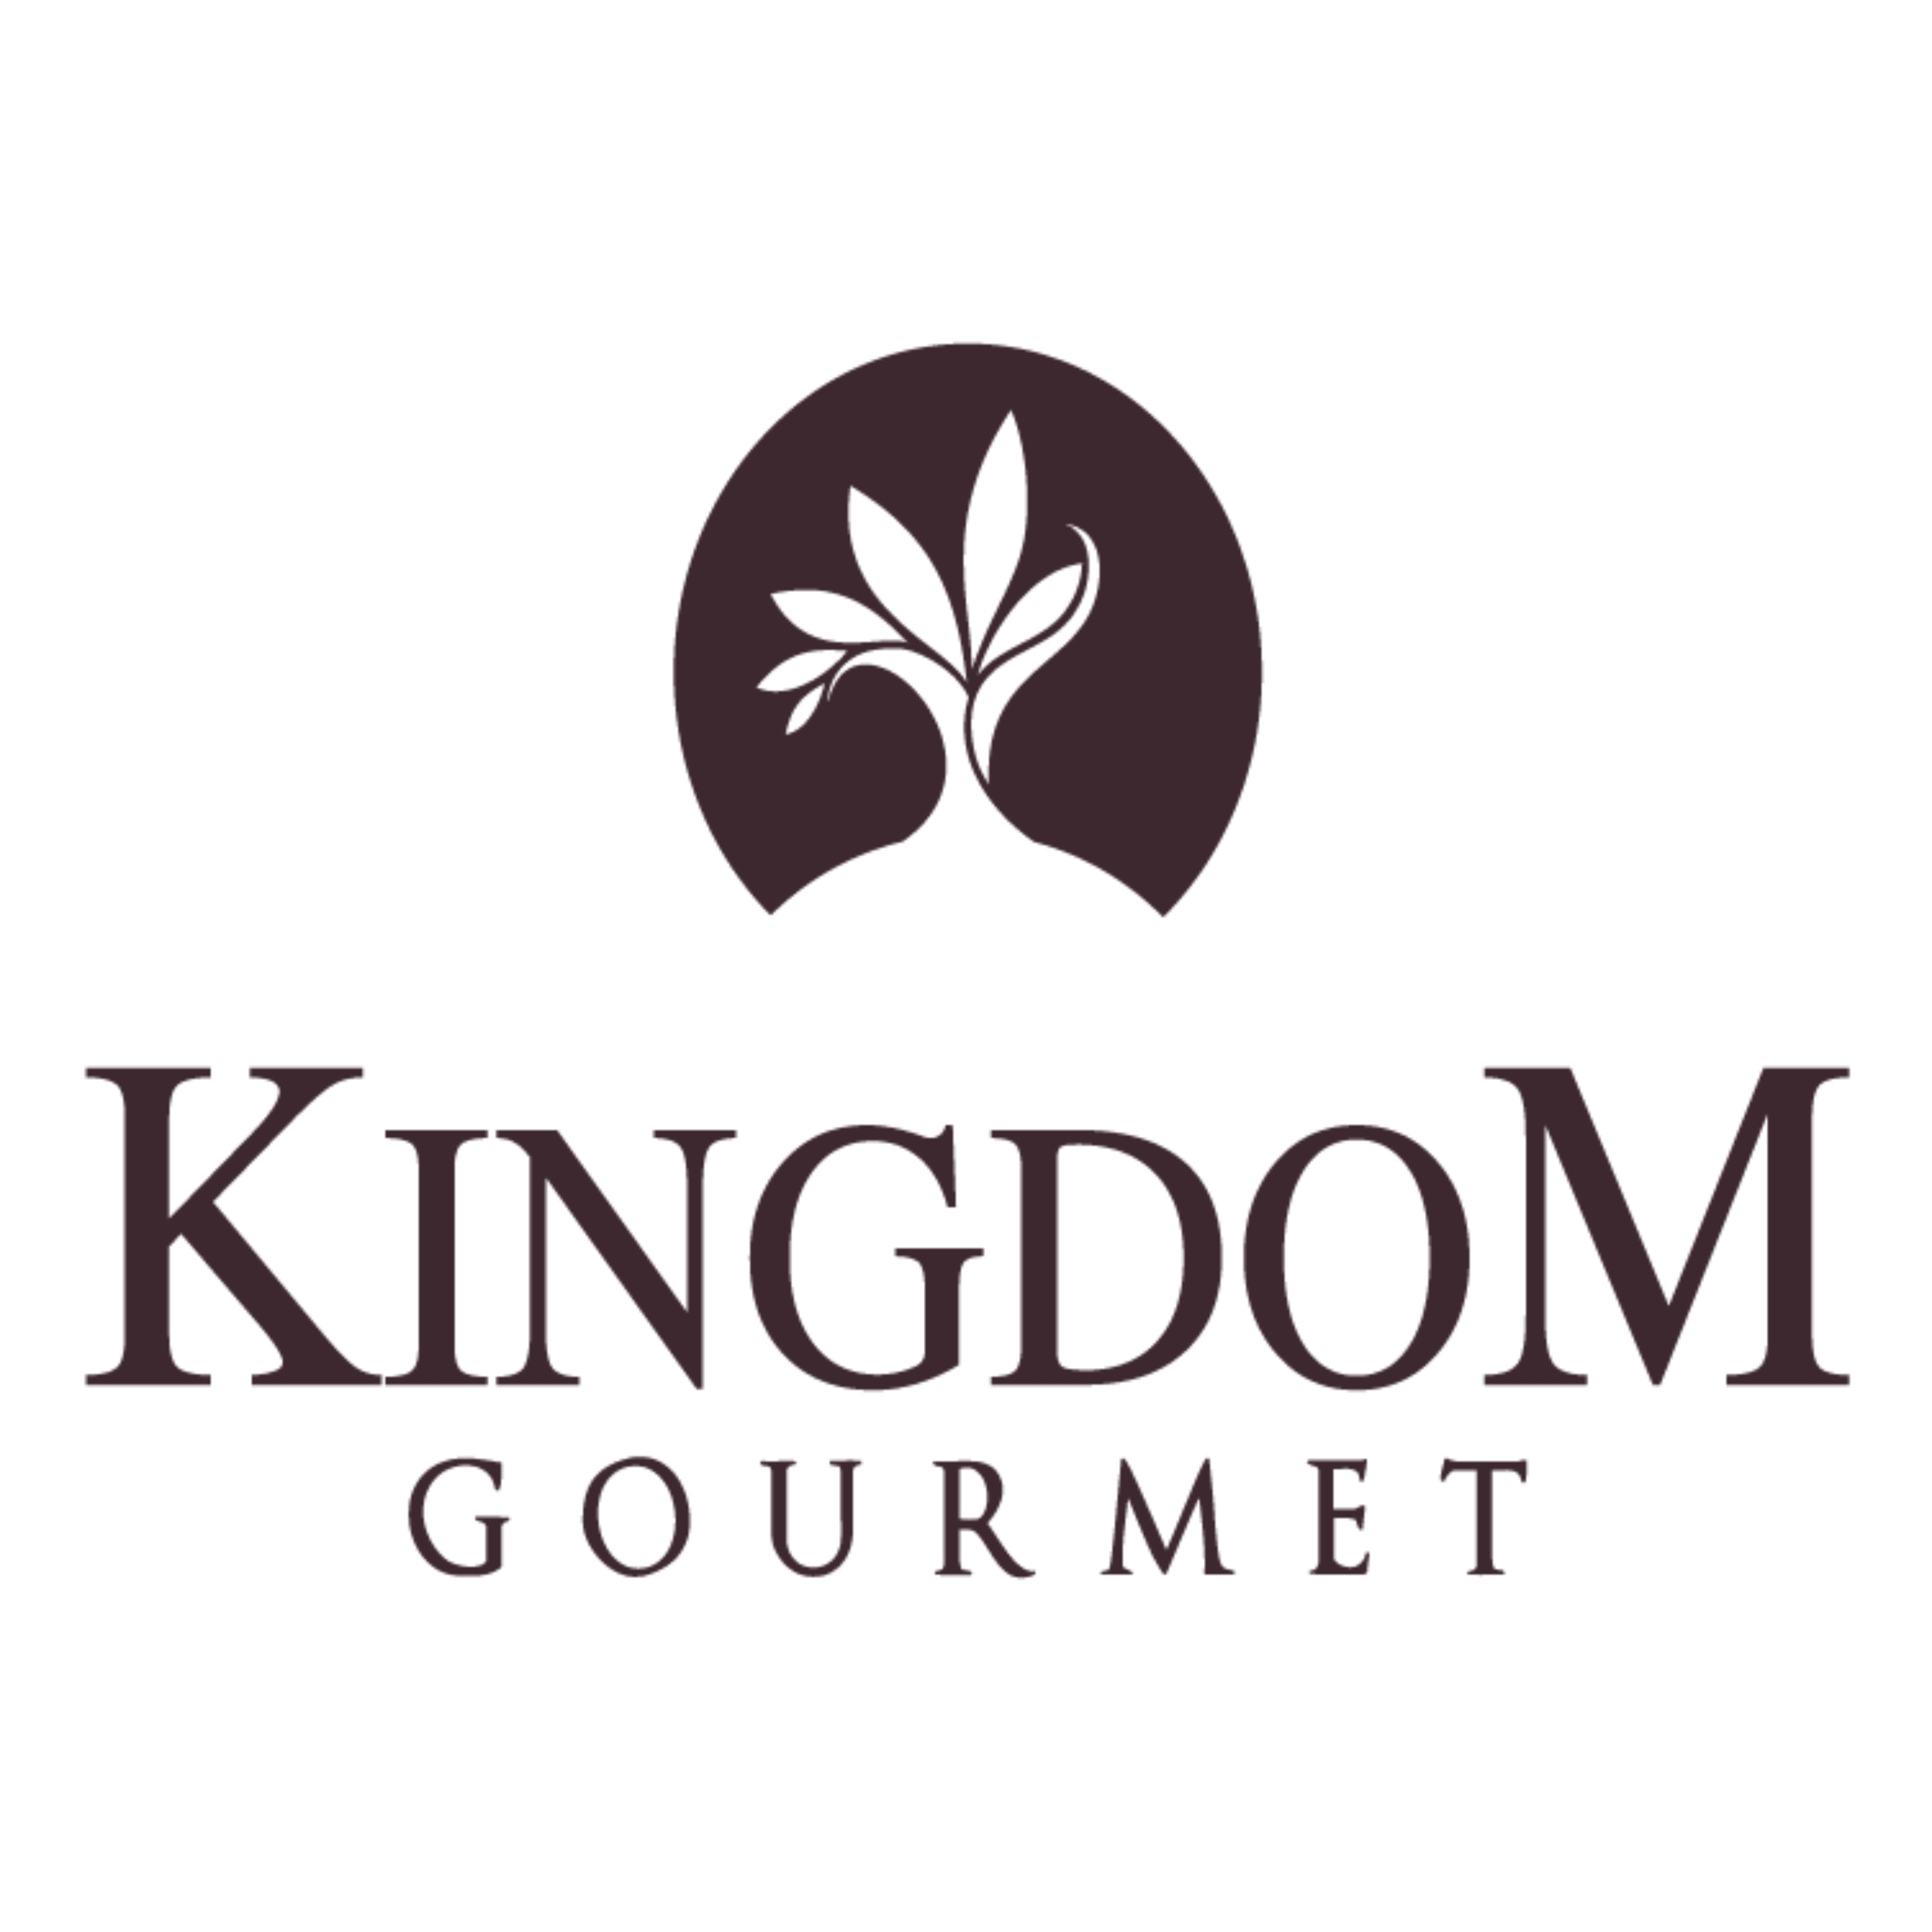 Kingdom Gourmet